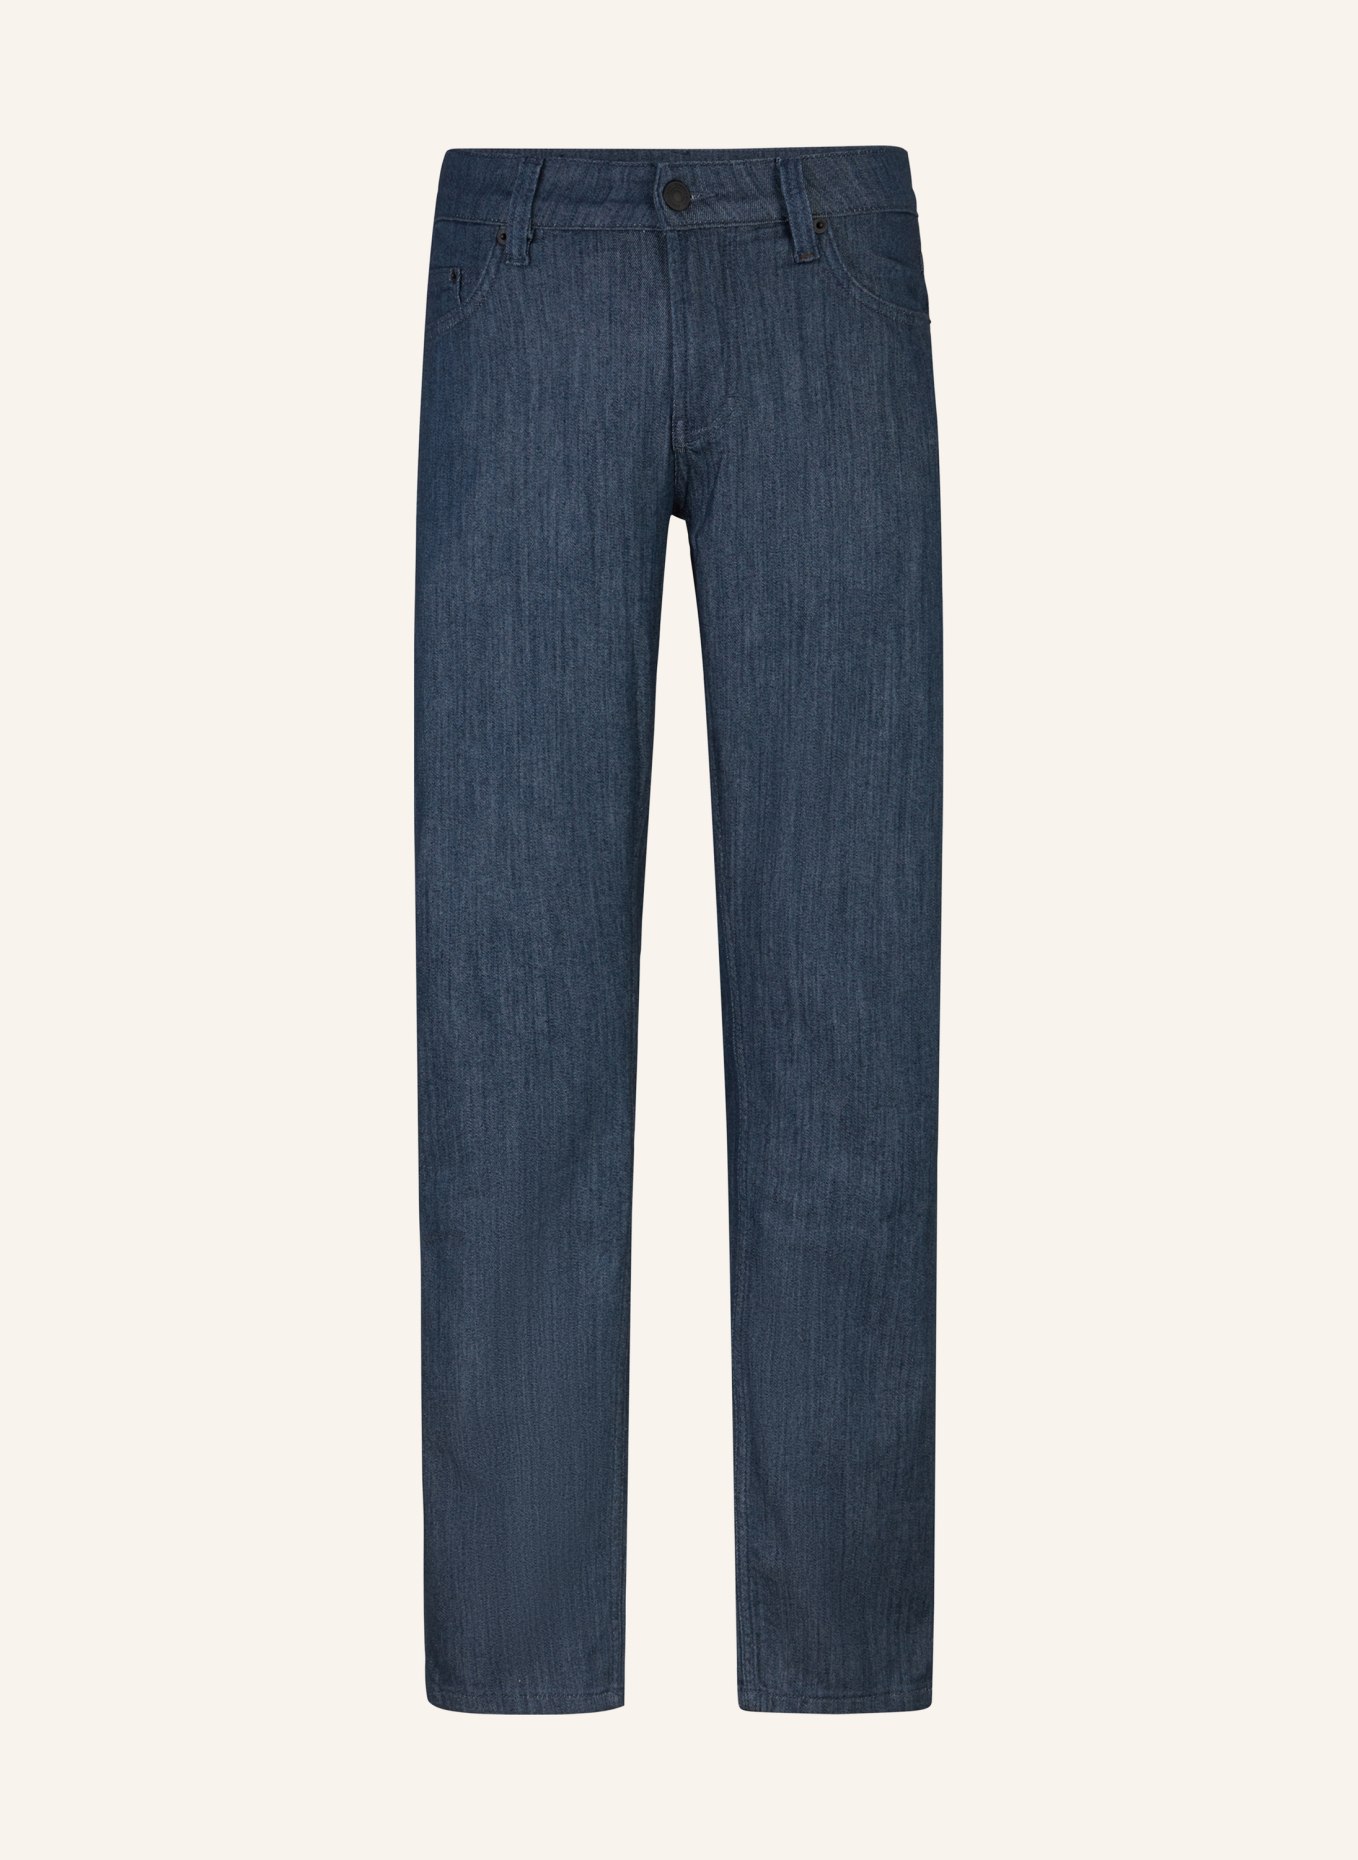 STRELLSON Jeans FLEX CROSS JEANS LIAM, DUNKELBLAU, Farbe: DUNKELBLAU (Bild 1)